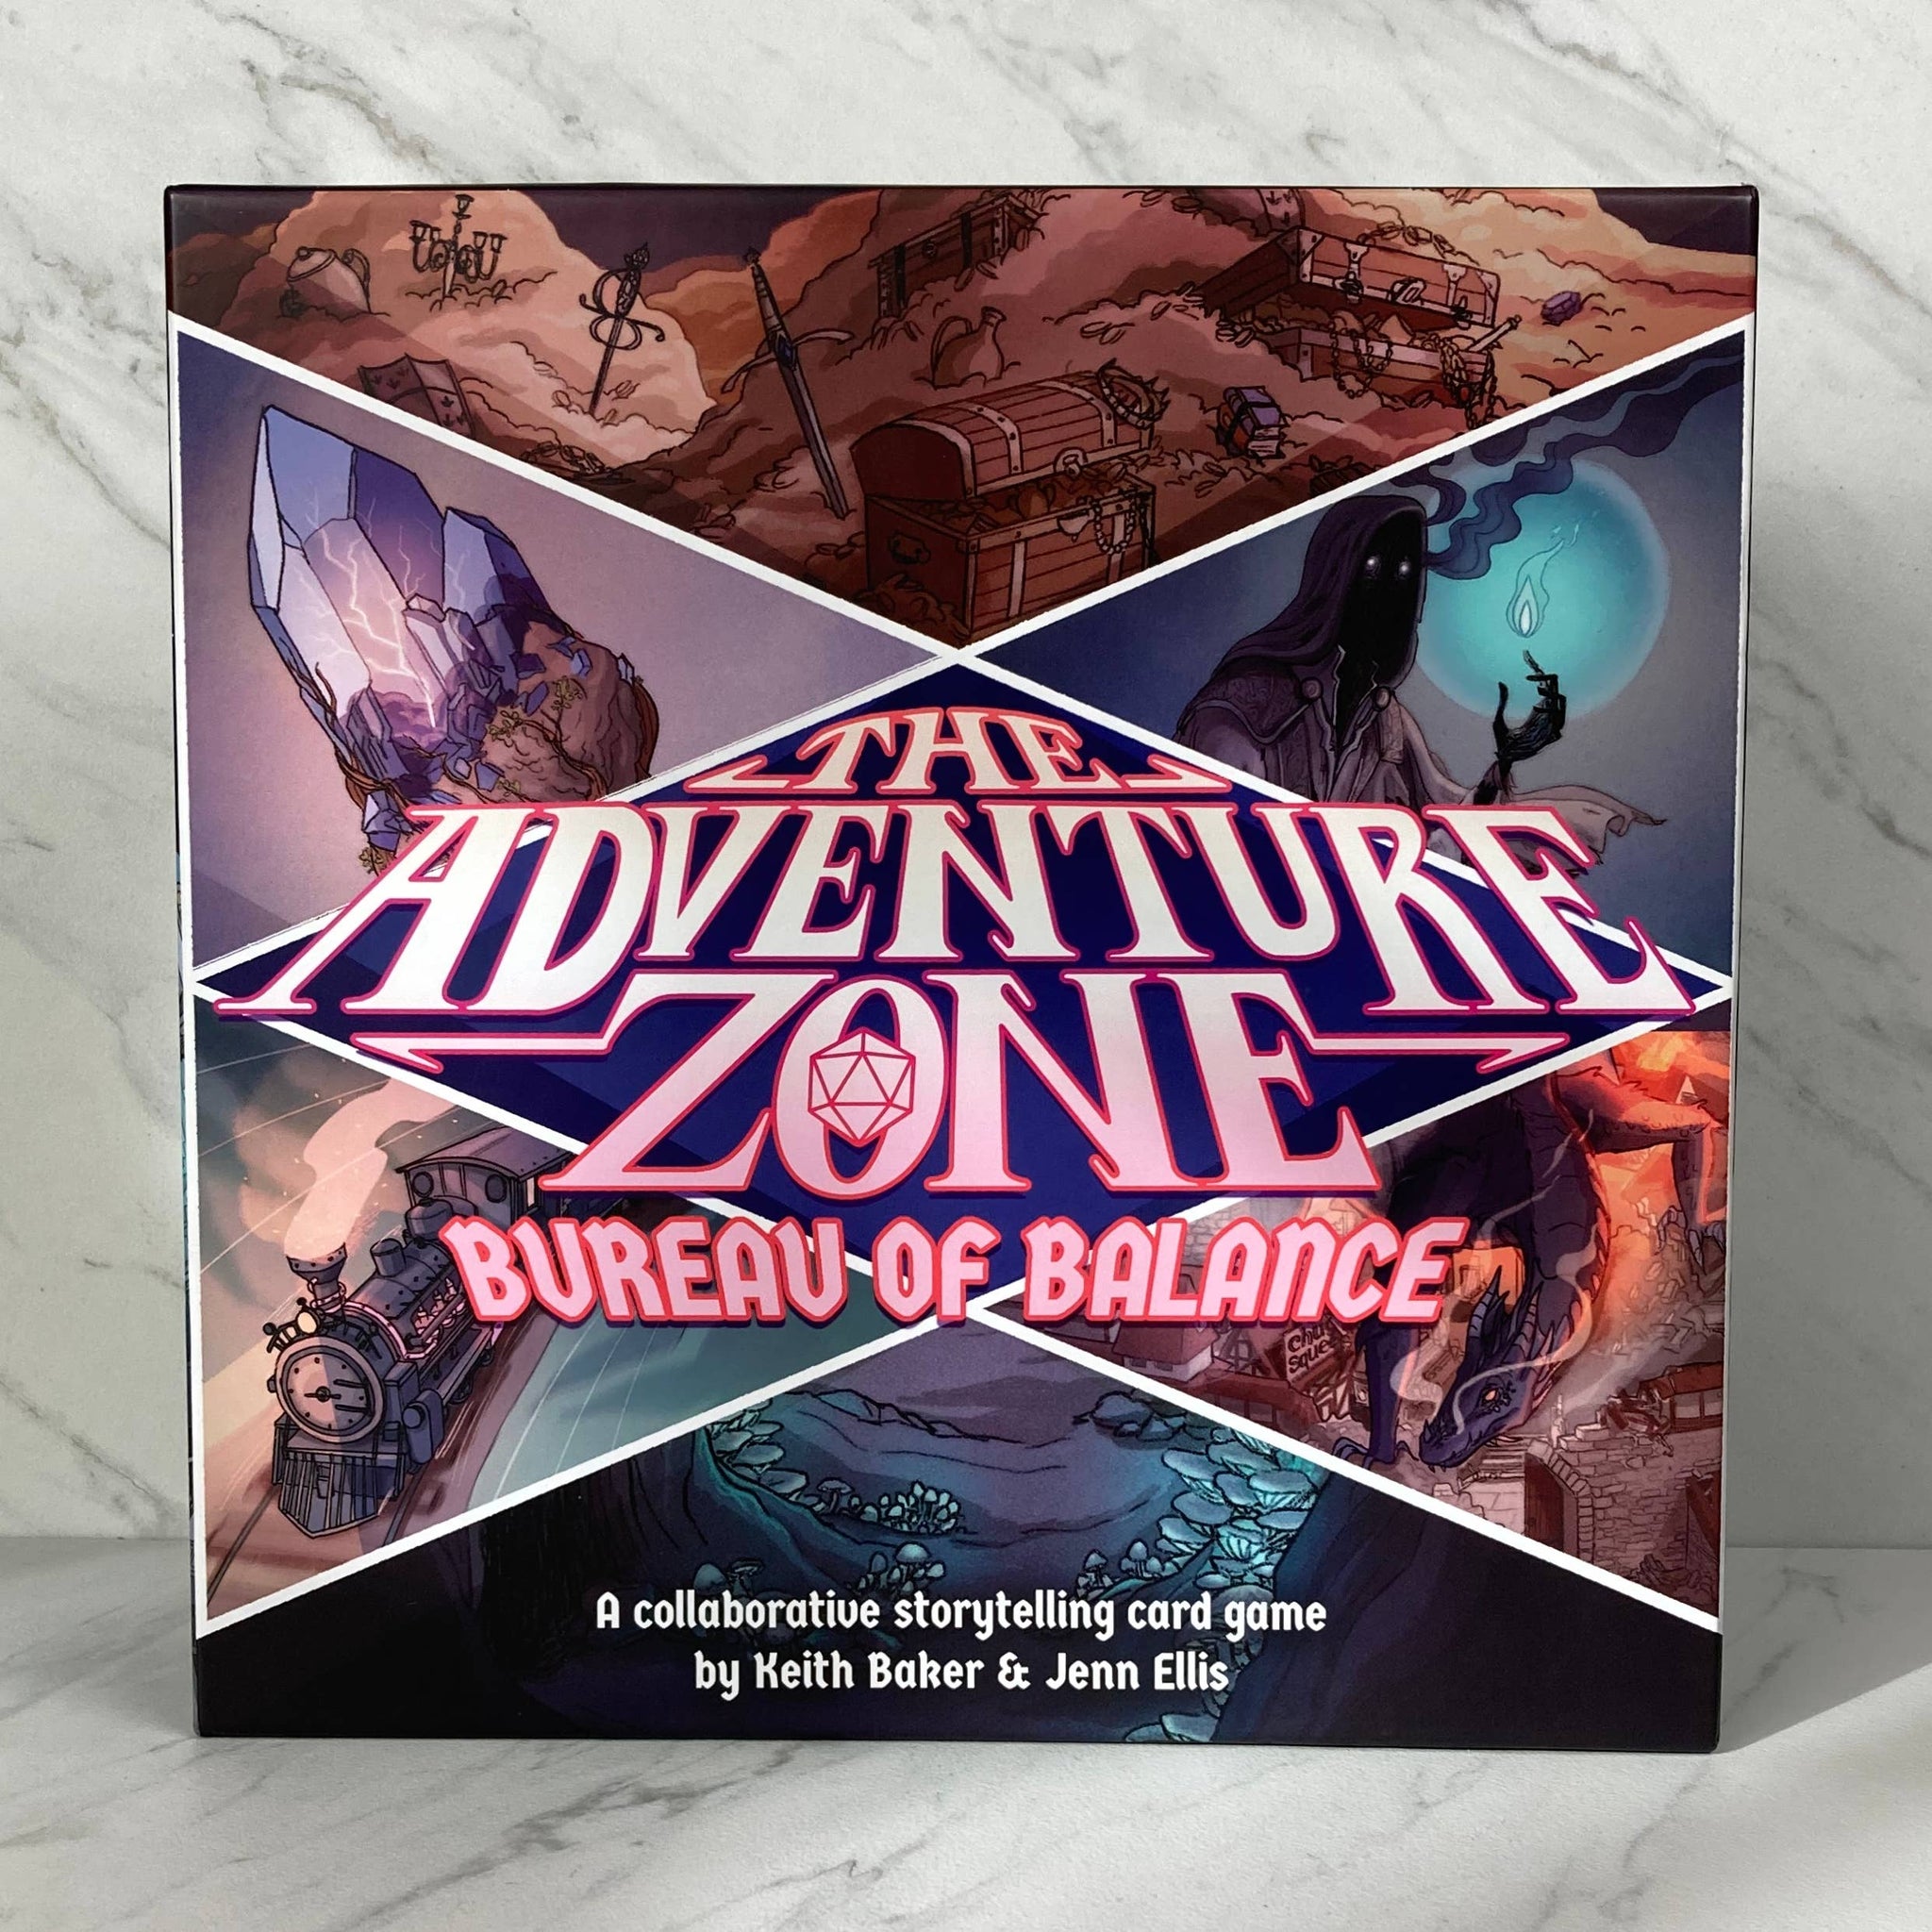 The Adventure Zone: Bureau of Balance Game